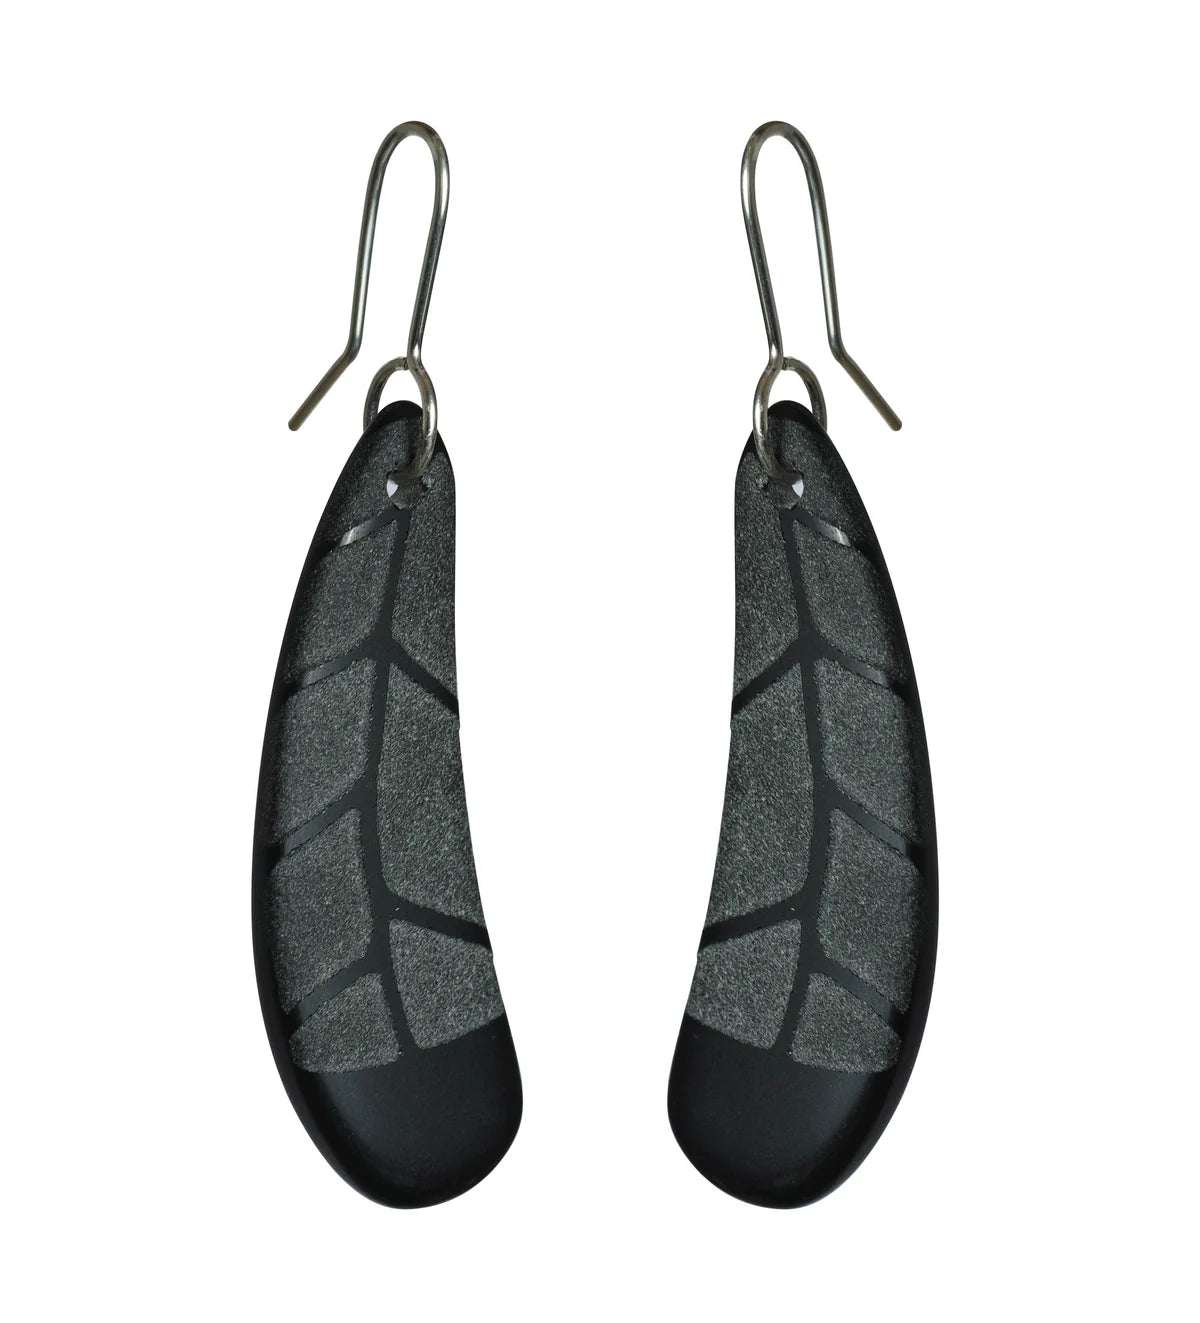 Huia Feather Earrings - Black Glass